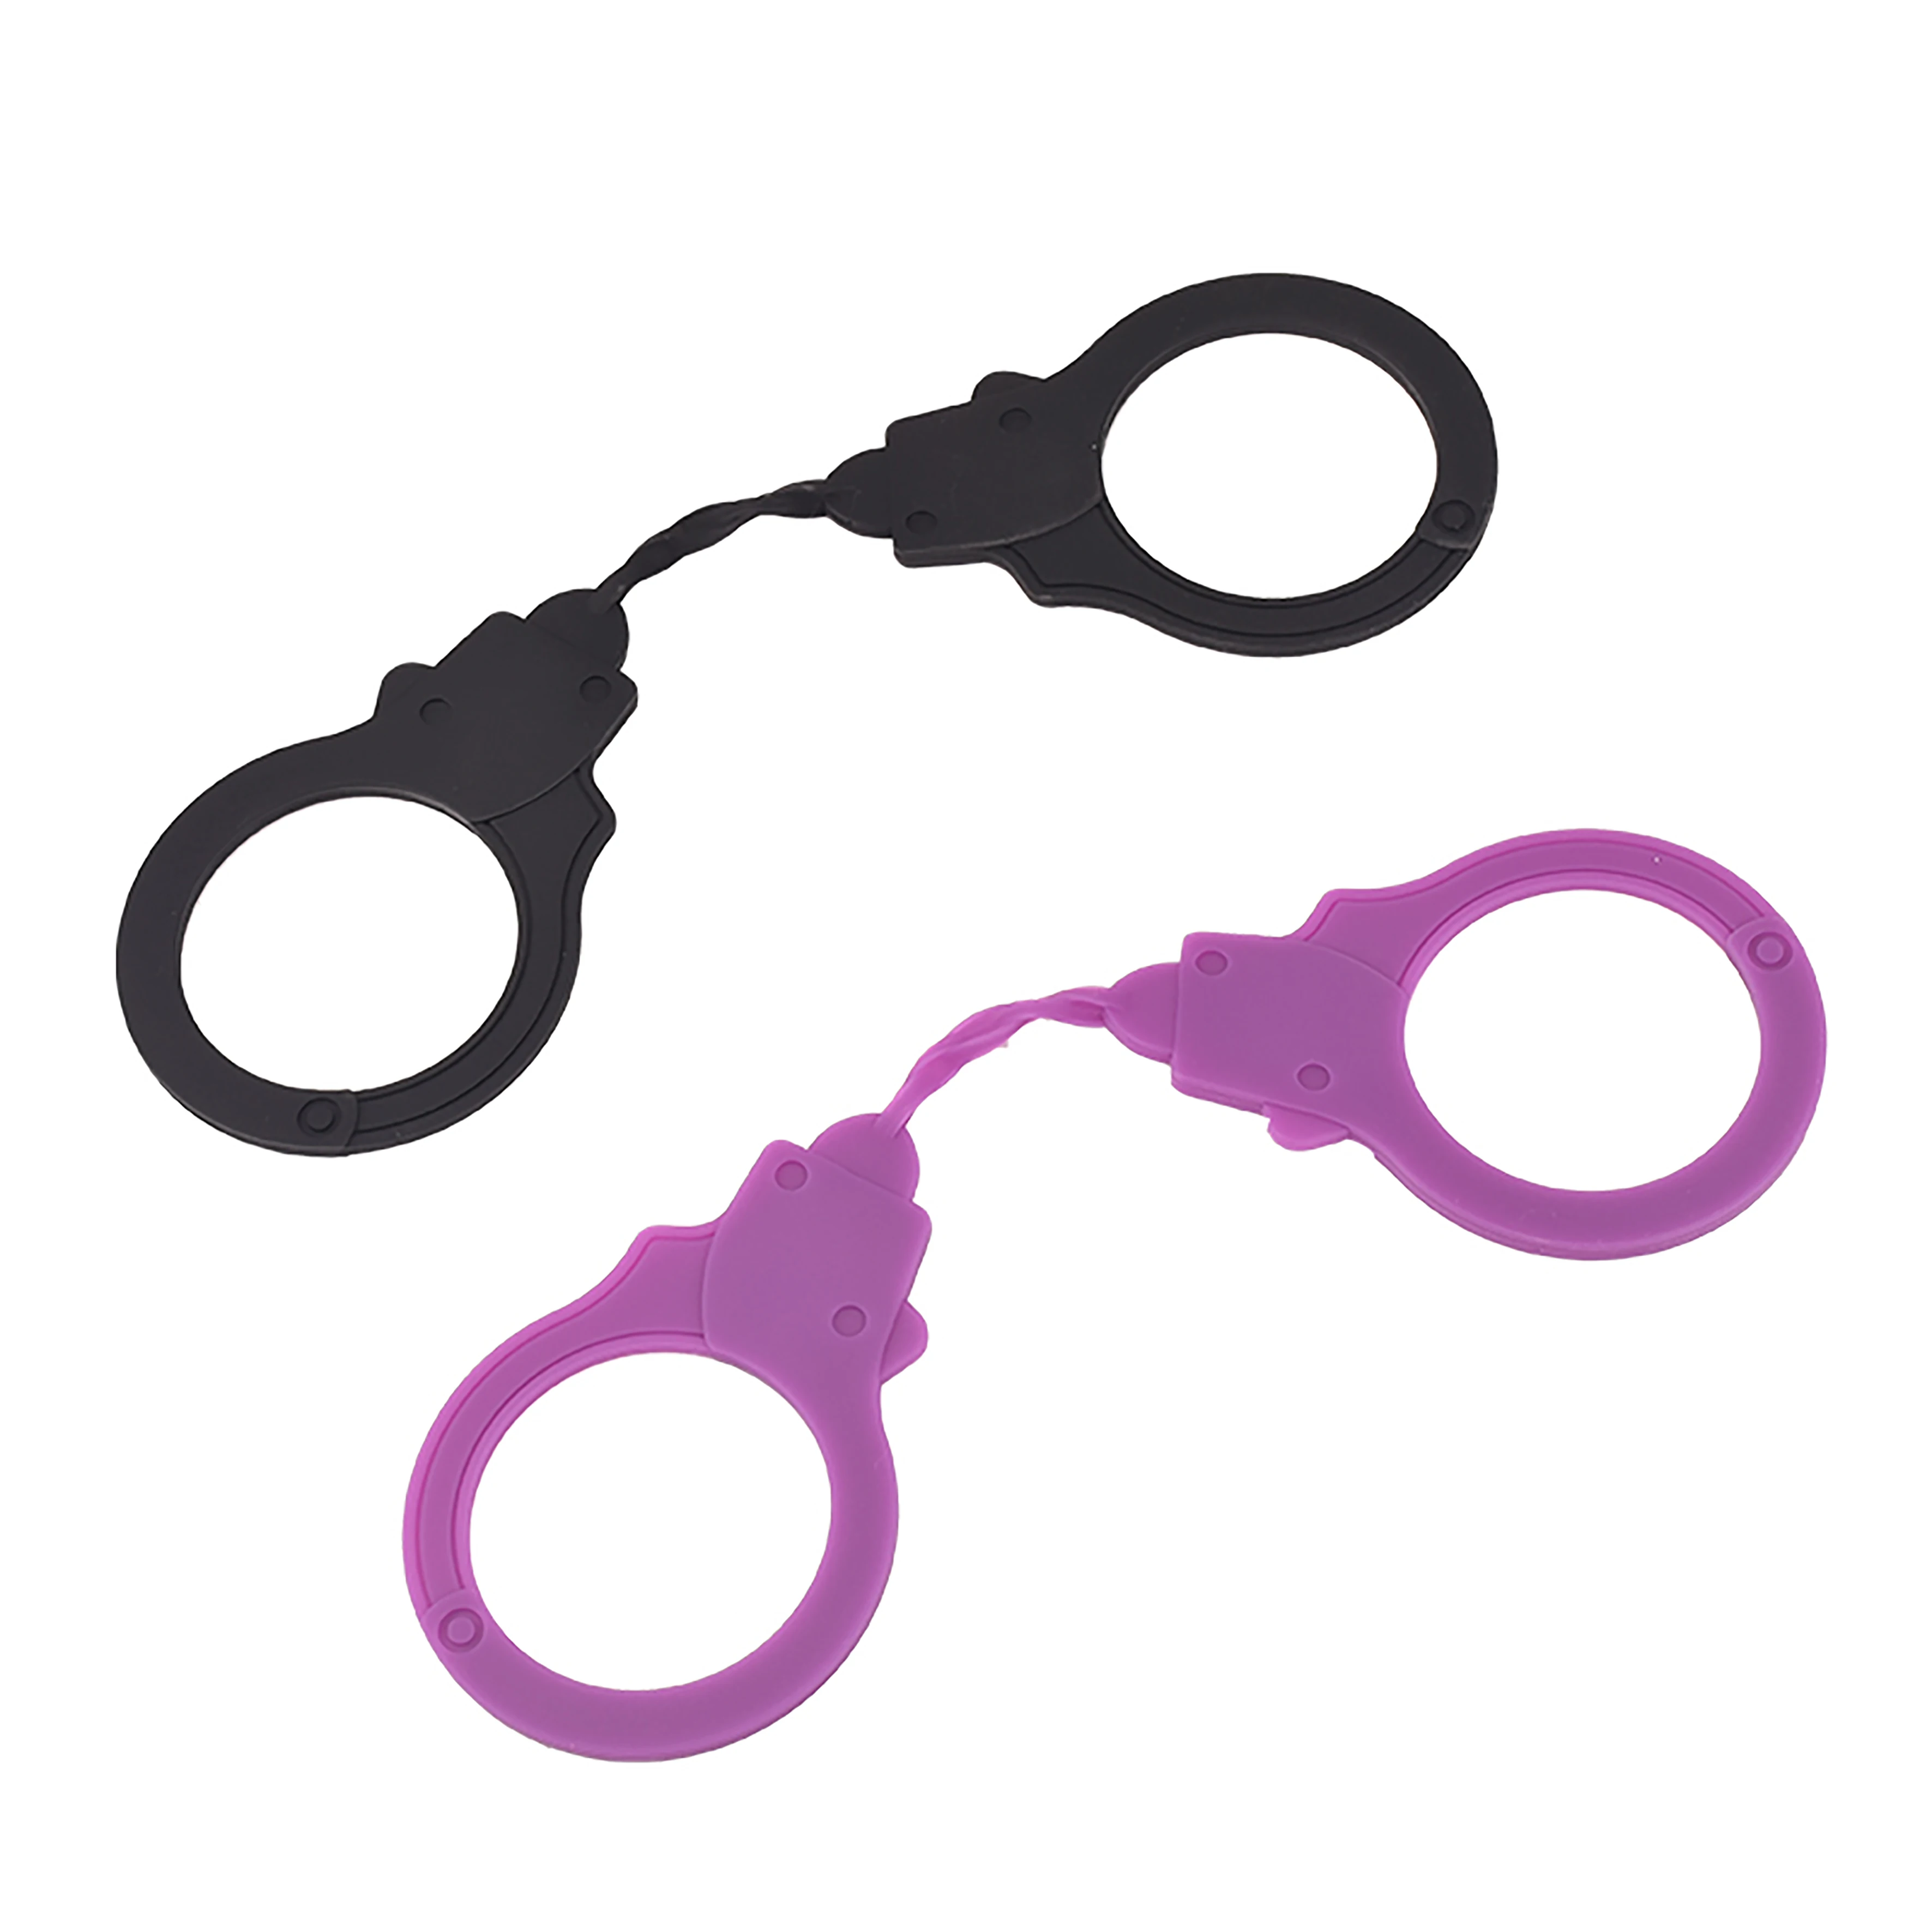 Soft Silicone Handcuffs Shackles Sex Bdsm Bondage Restraints Couples Erotic Adult Games Buy 